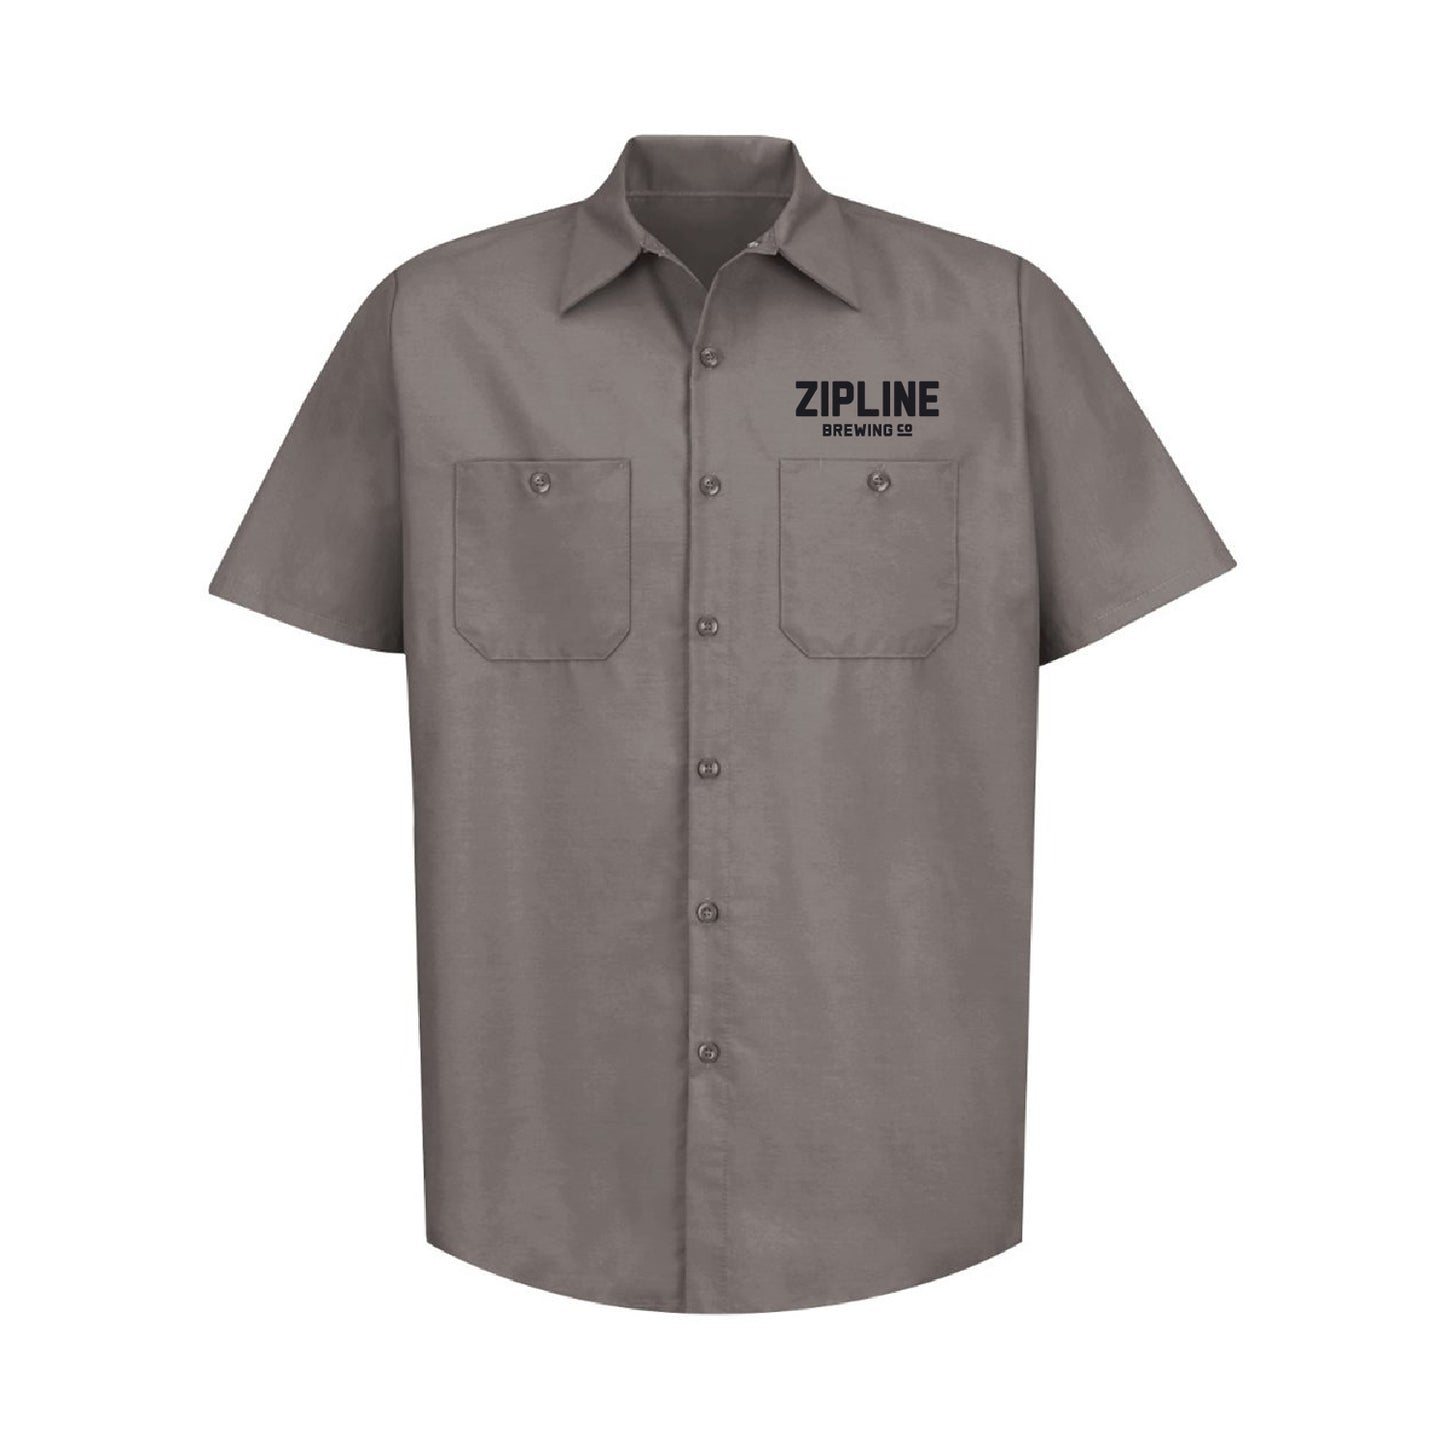 Zipline Brewing Co. Industrial Short Sleeve Work Shirt